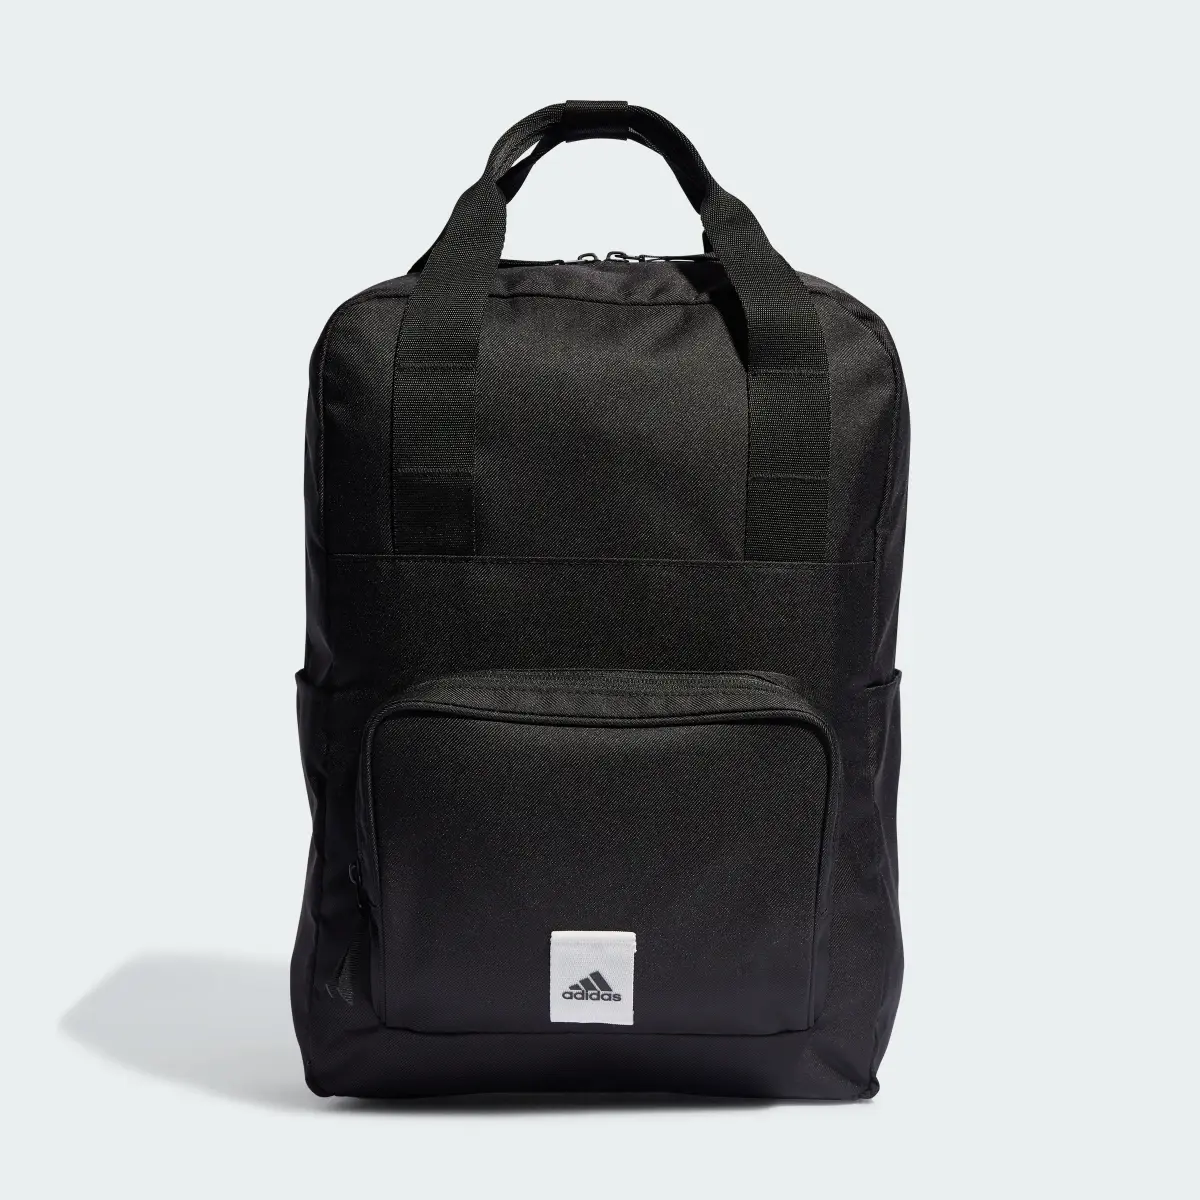 Adidas Prime Backpack. 2